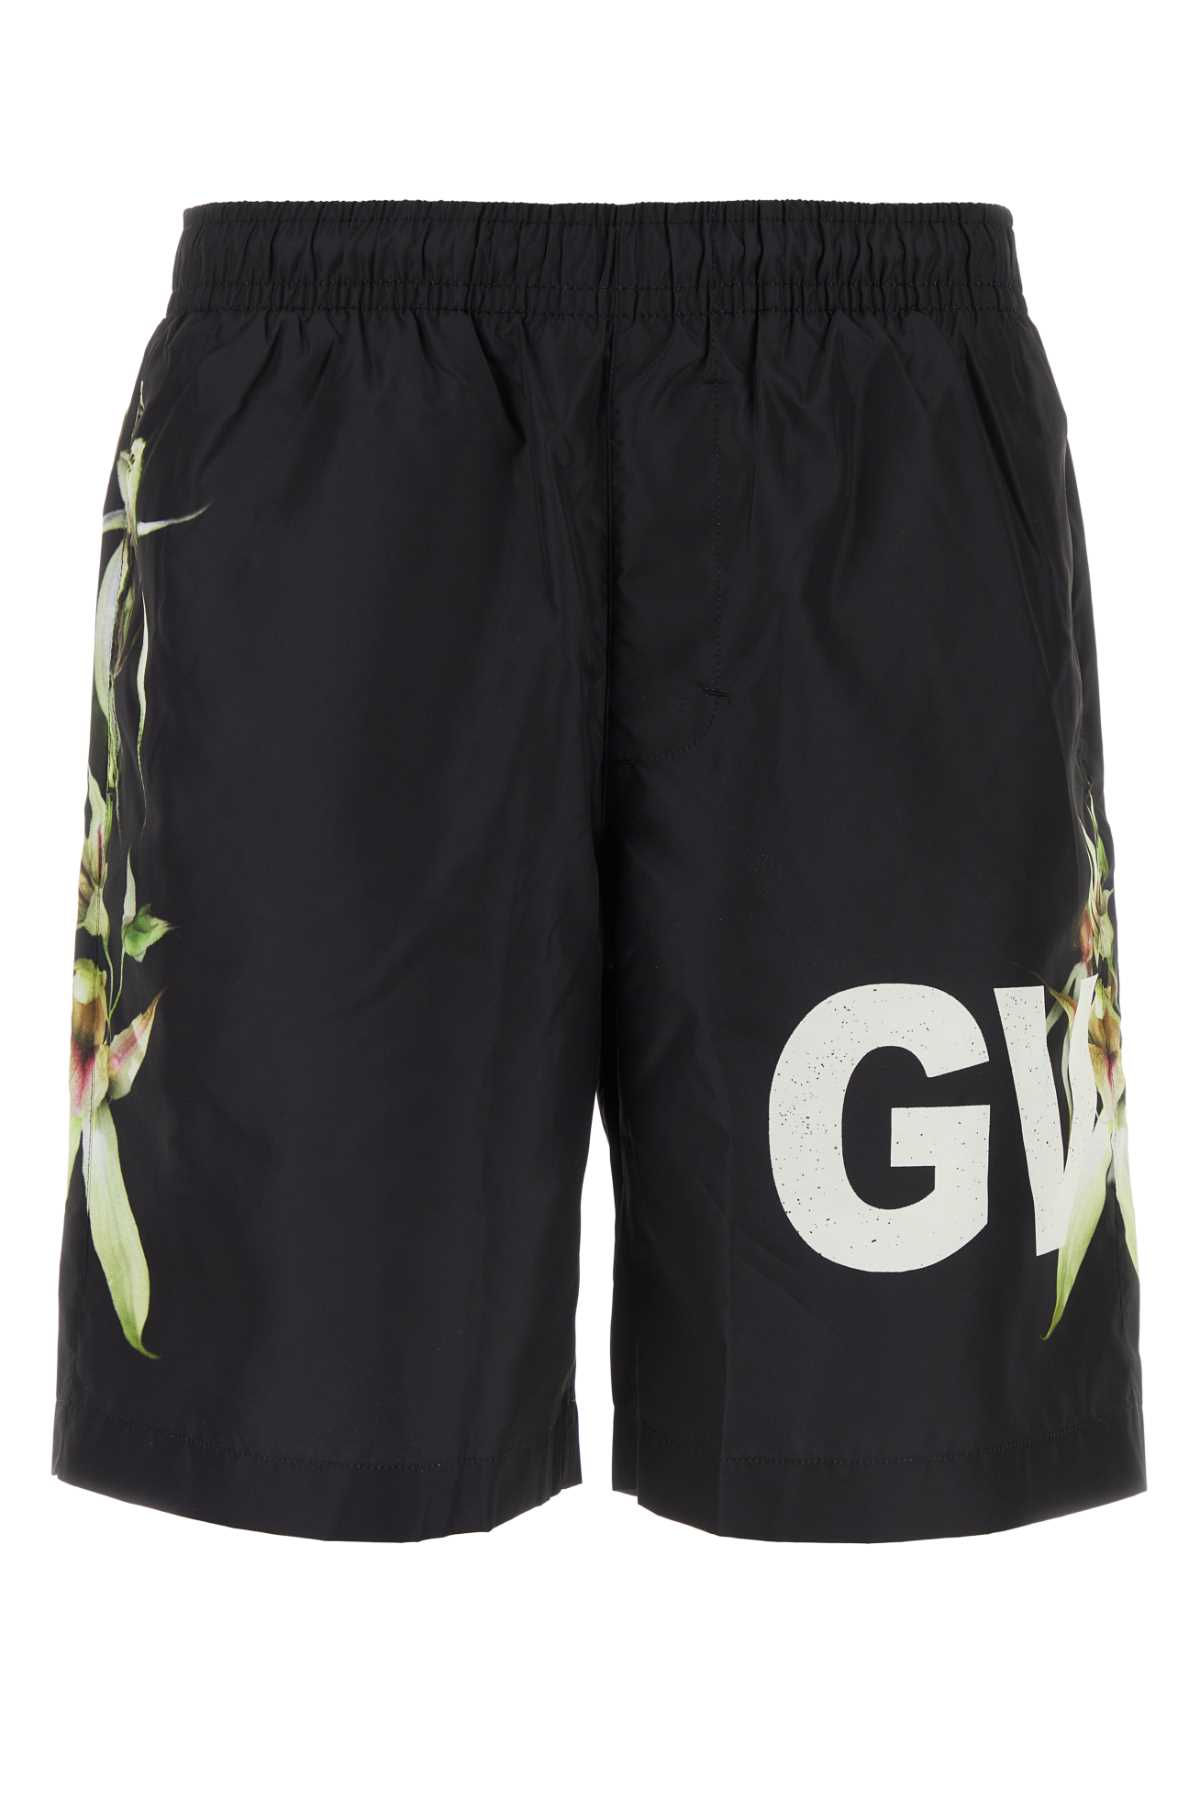 Givenchy Black Polyester Swimming Shorts In Blackwhiteyellow